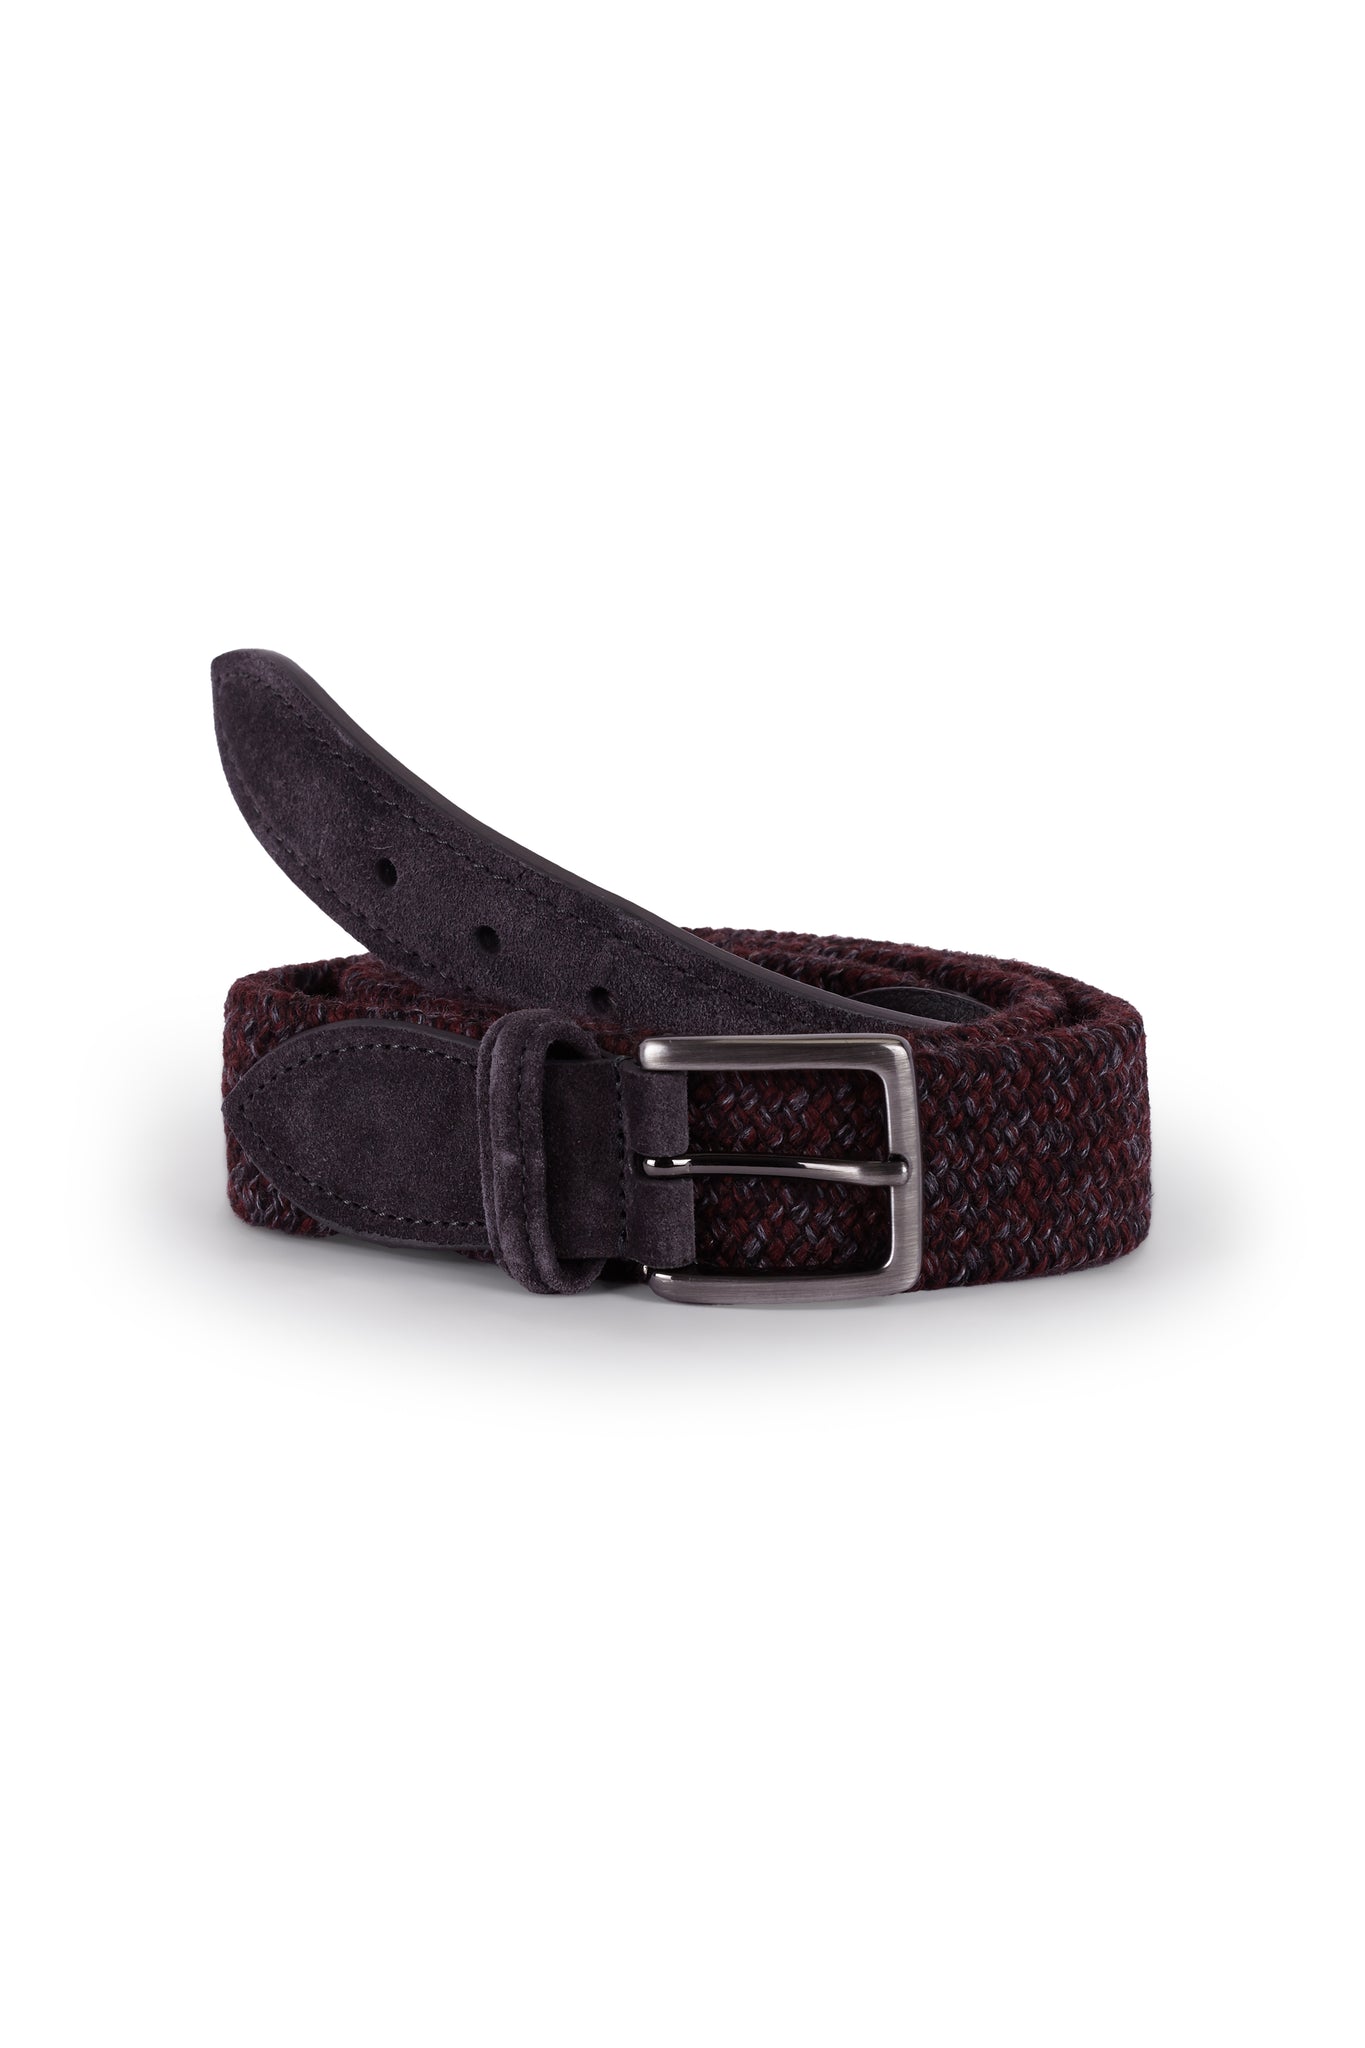 Wool braided belt